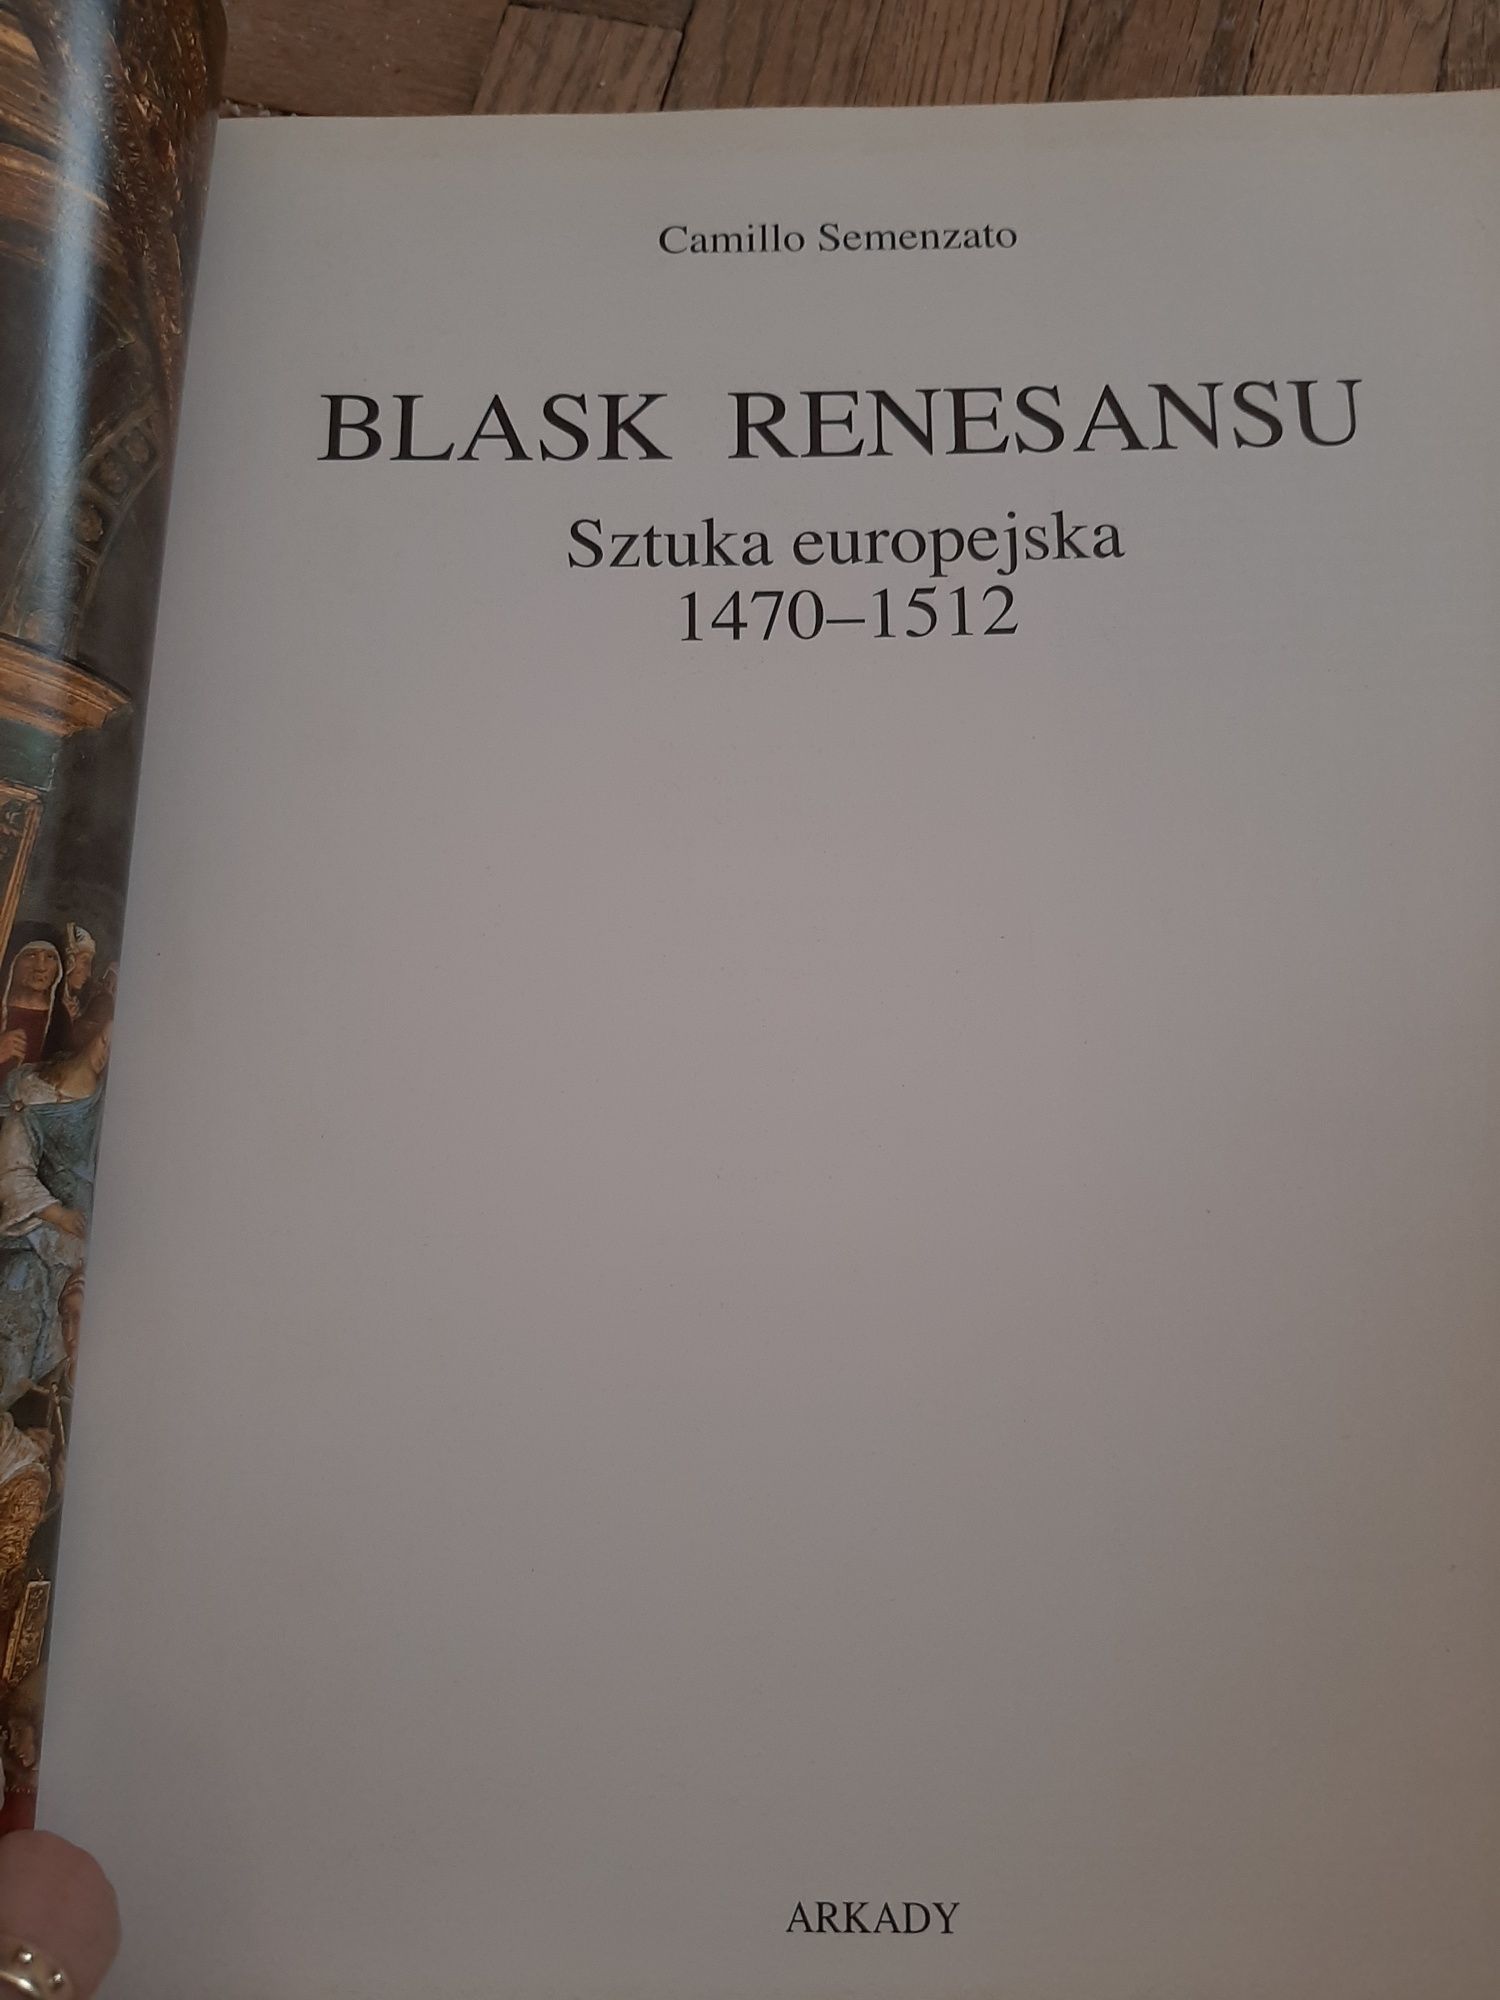 Album Blask Renesansu Camillo Semenzato